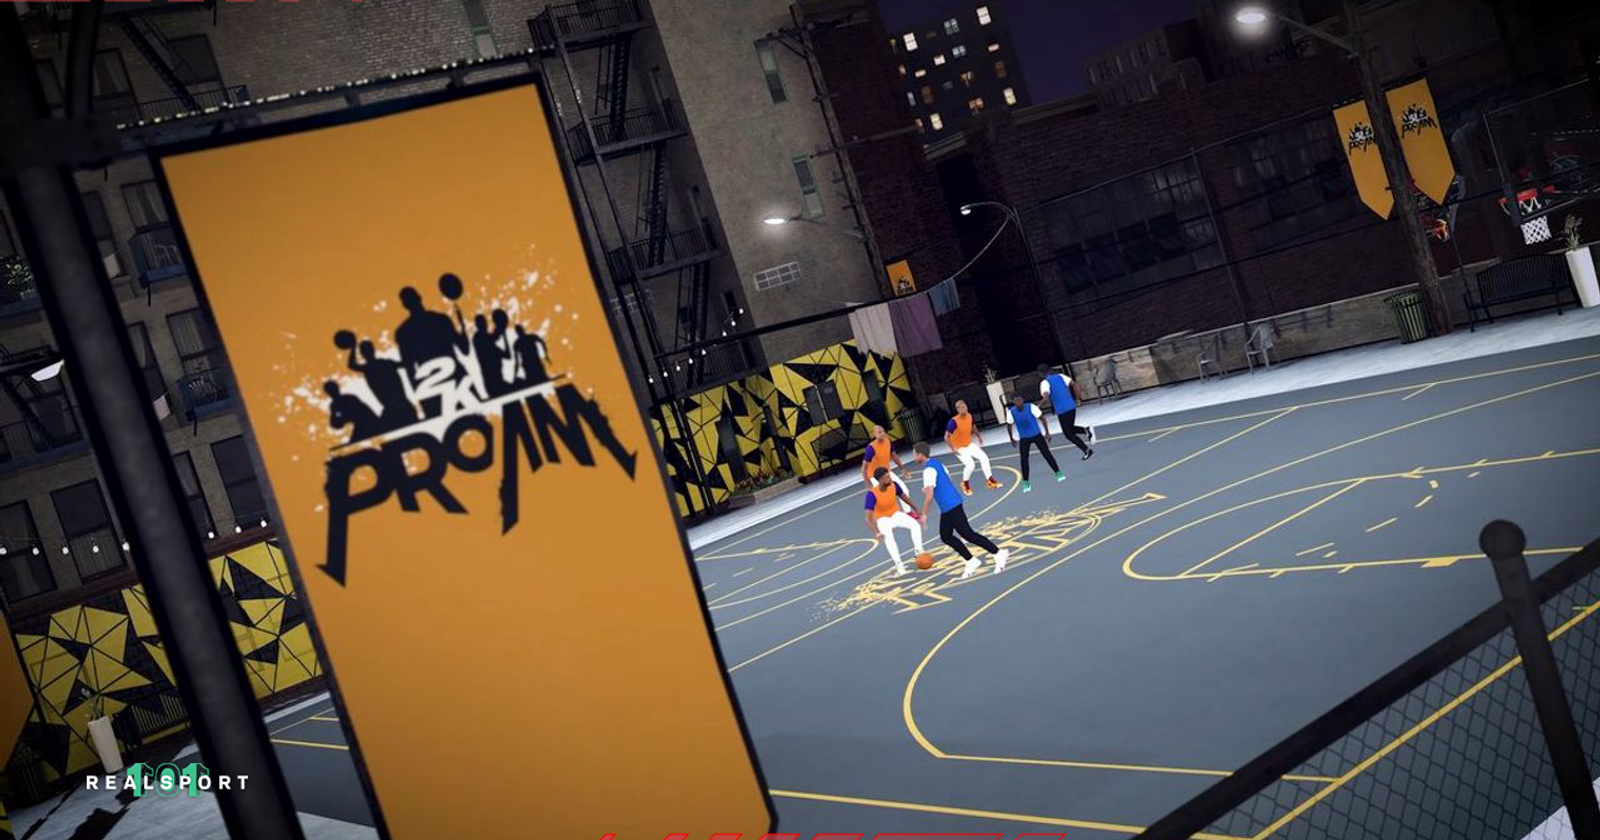 NBA 2K16's new 2K Pro-Am mode brings custom team games online